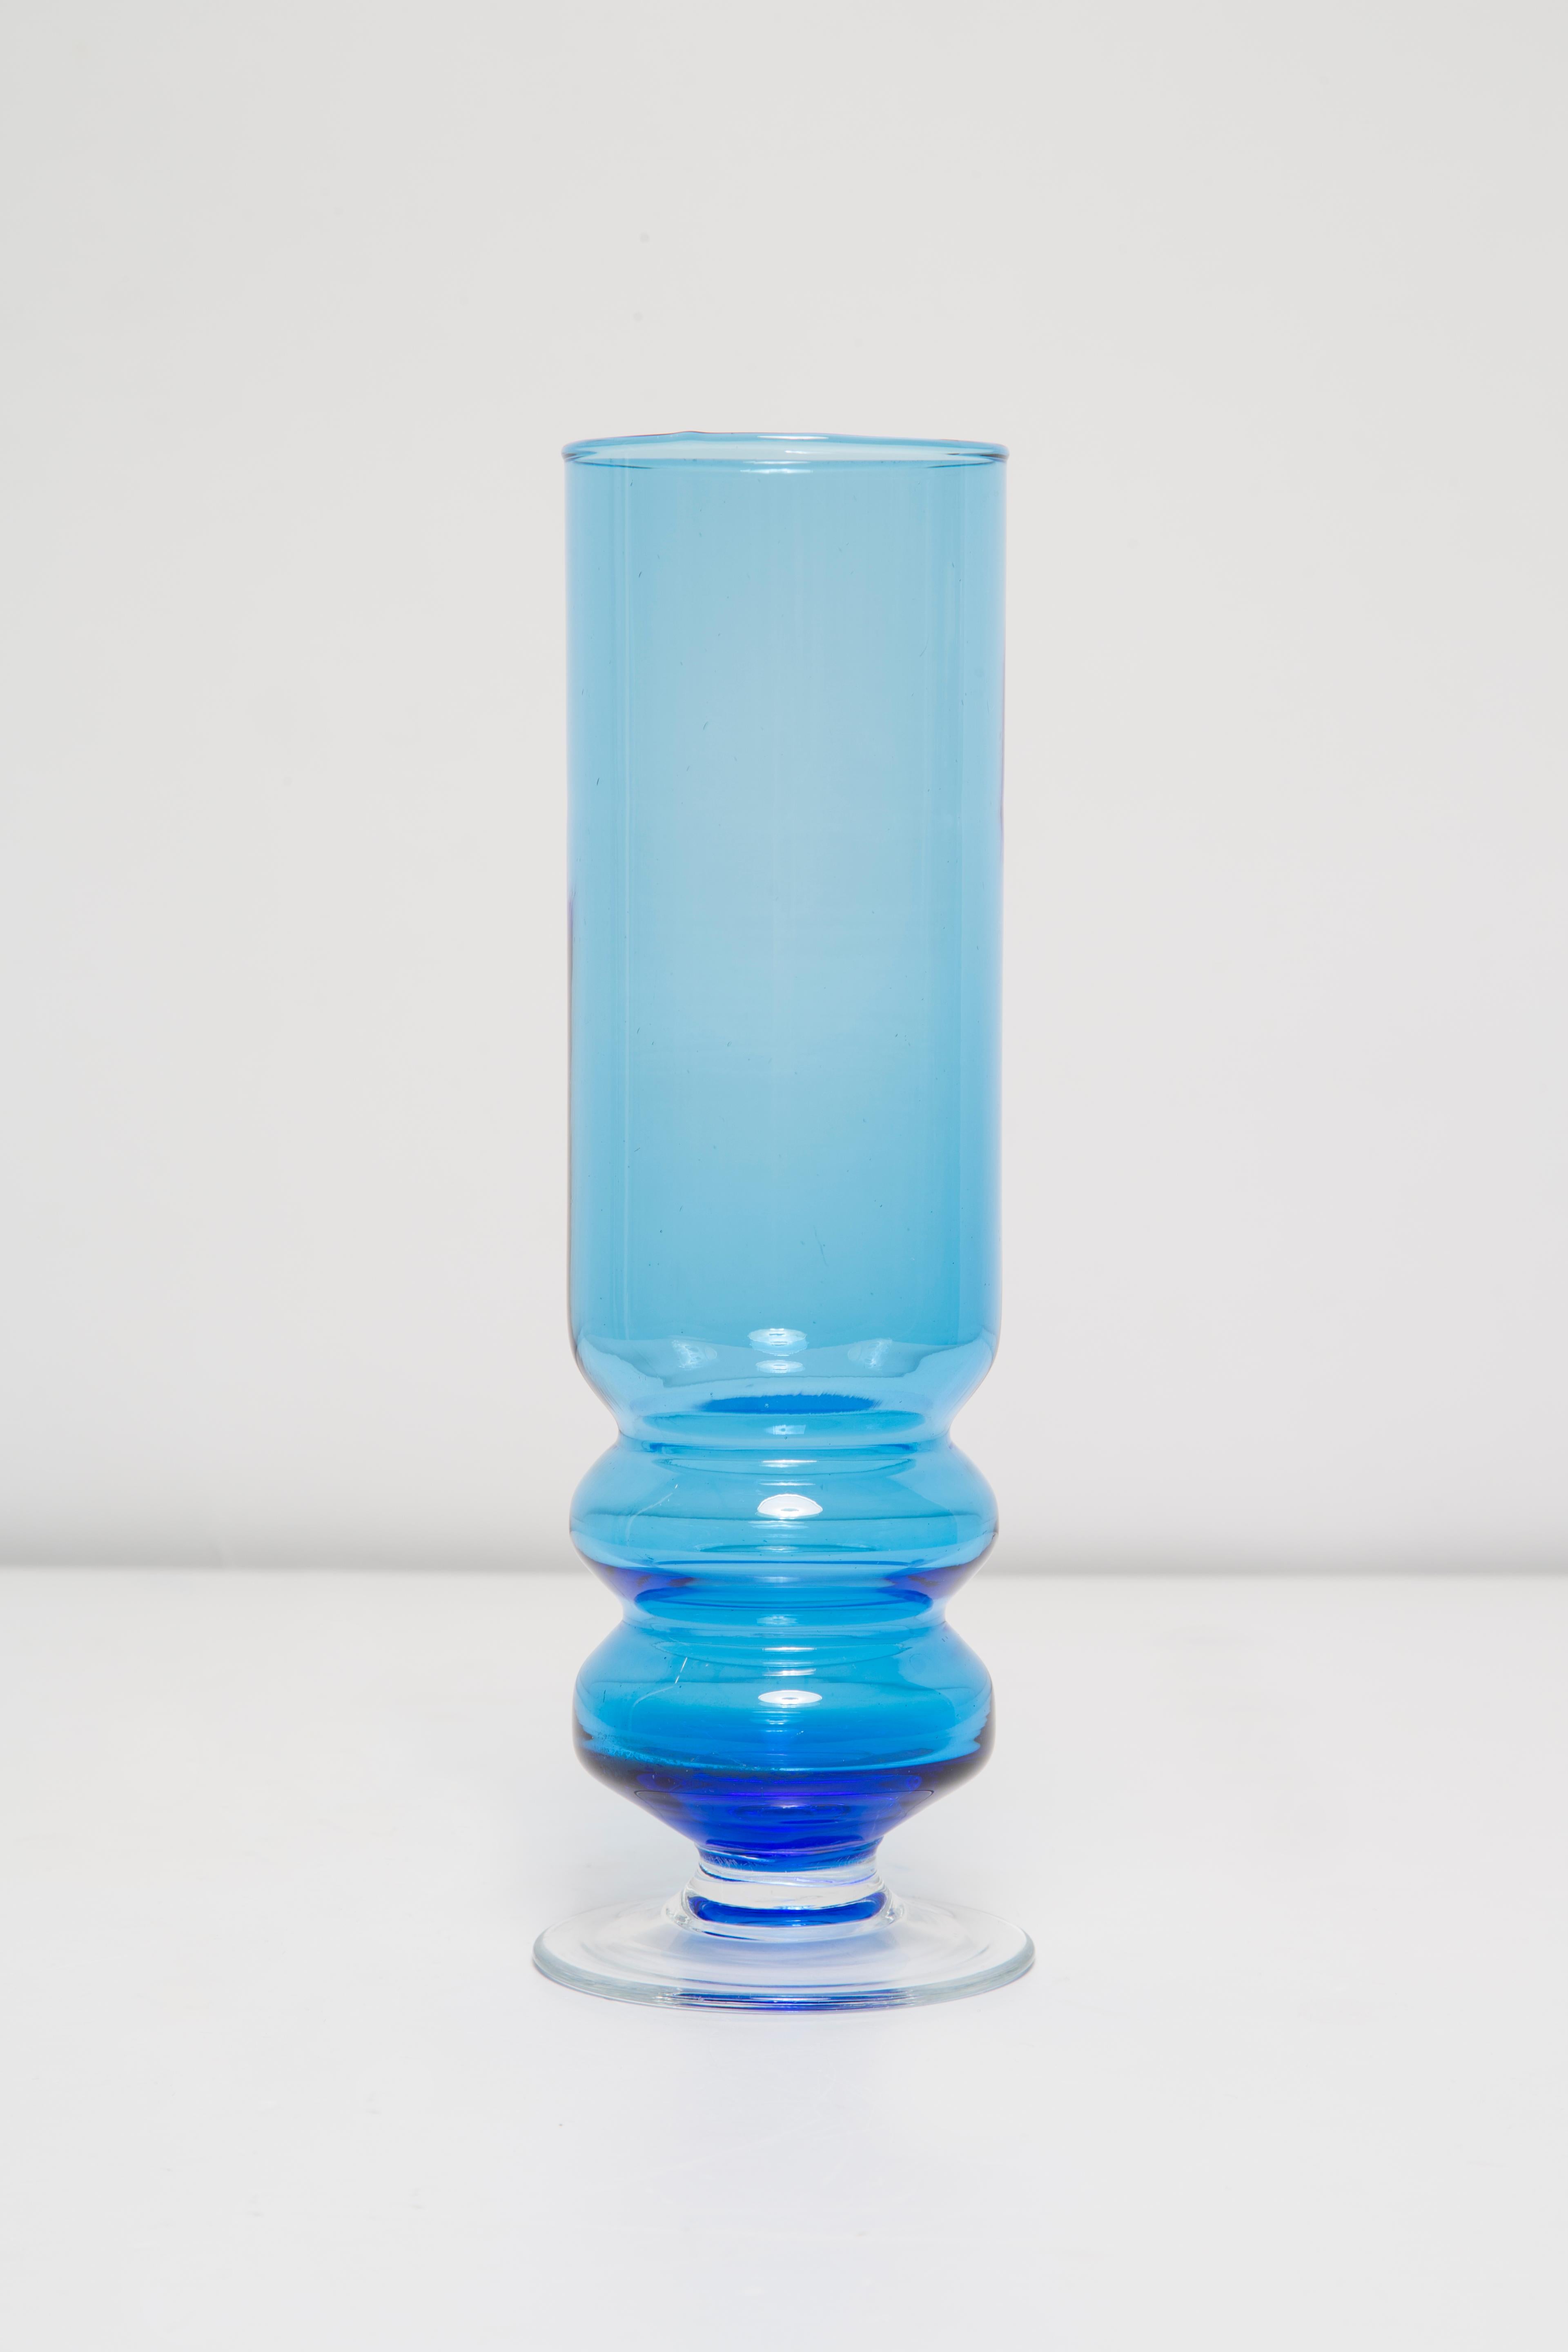 Polish Mid Century Vintage Blue Decorative Glass Vase, Europe, 1960s For Sale